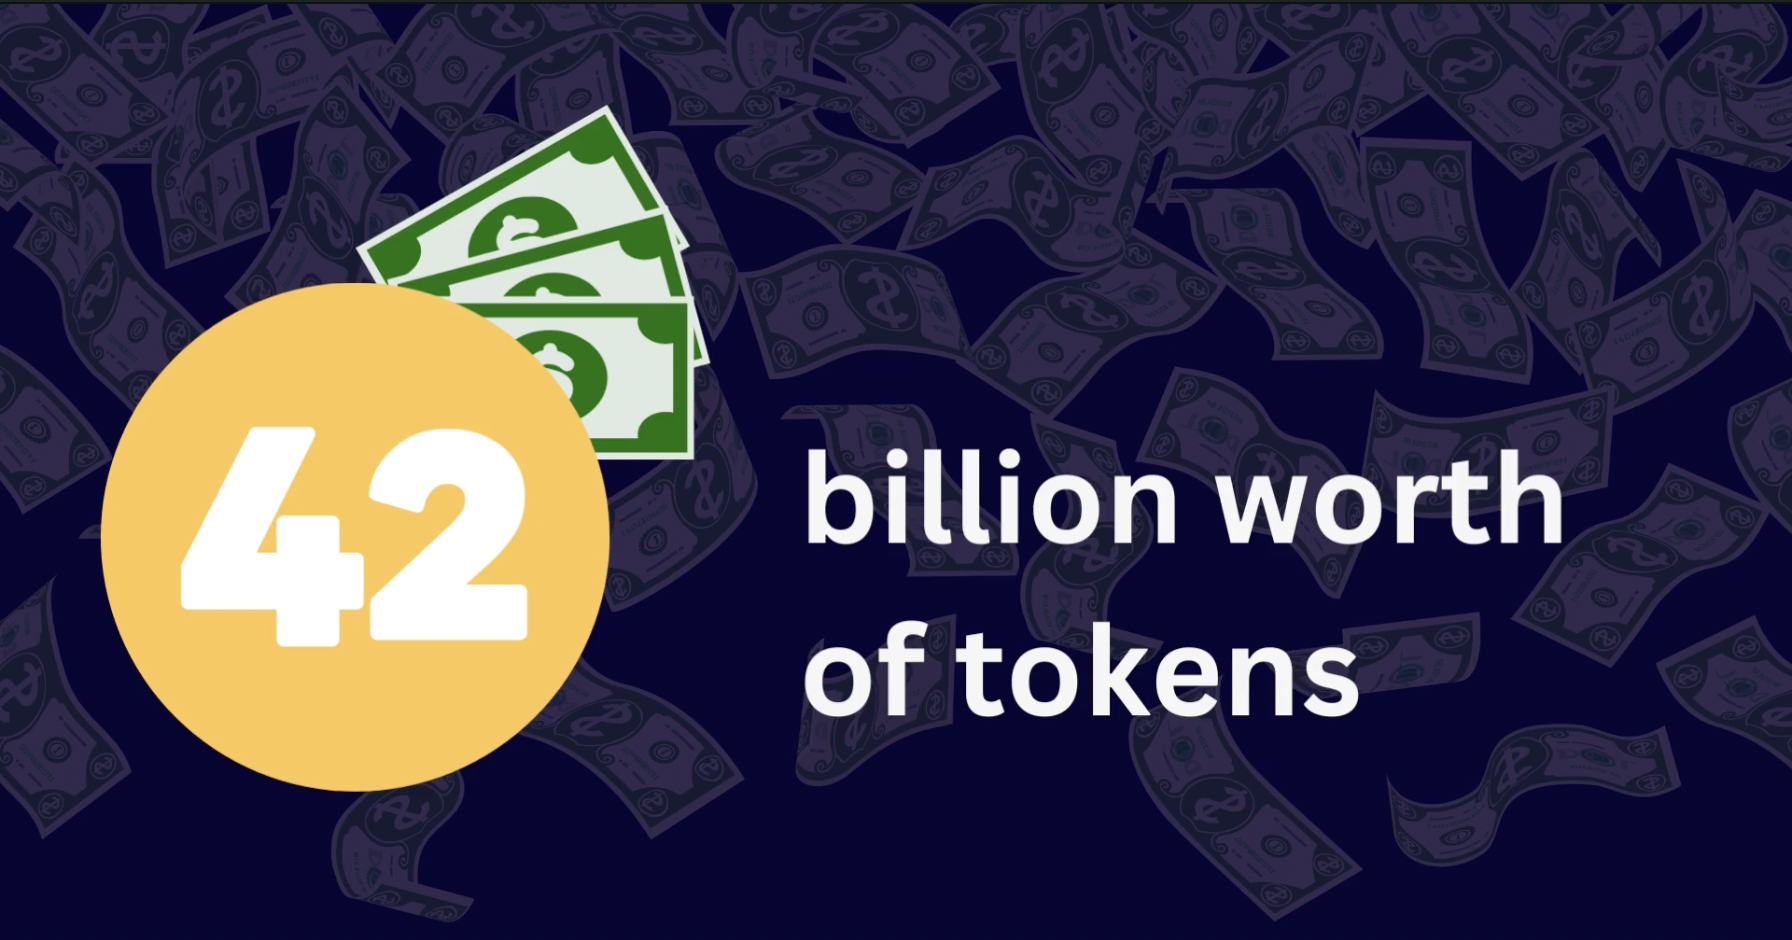 $42 billion worth of tokens